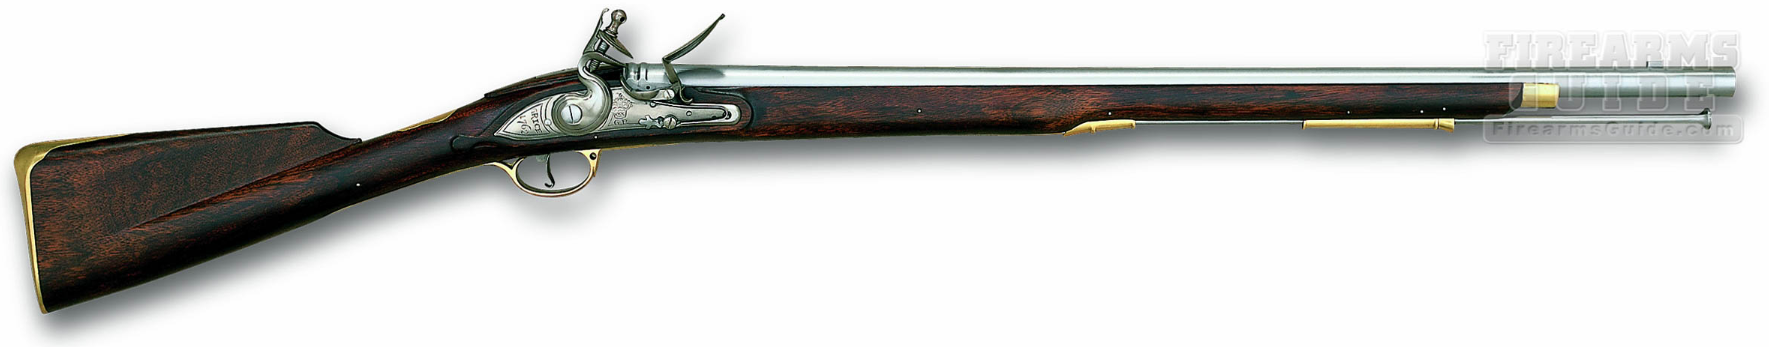 Pedersoli Brown-Bess Carbine Standard Flintlock